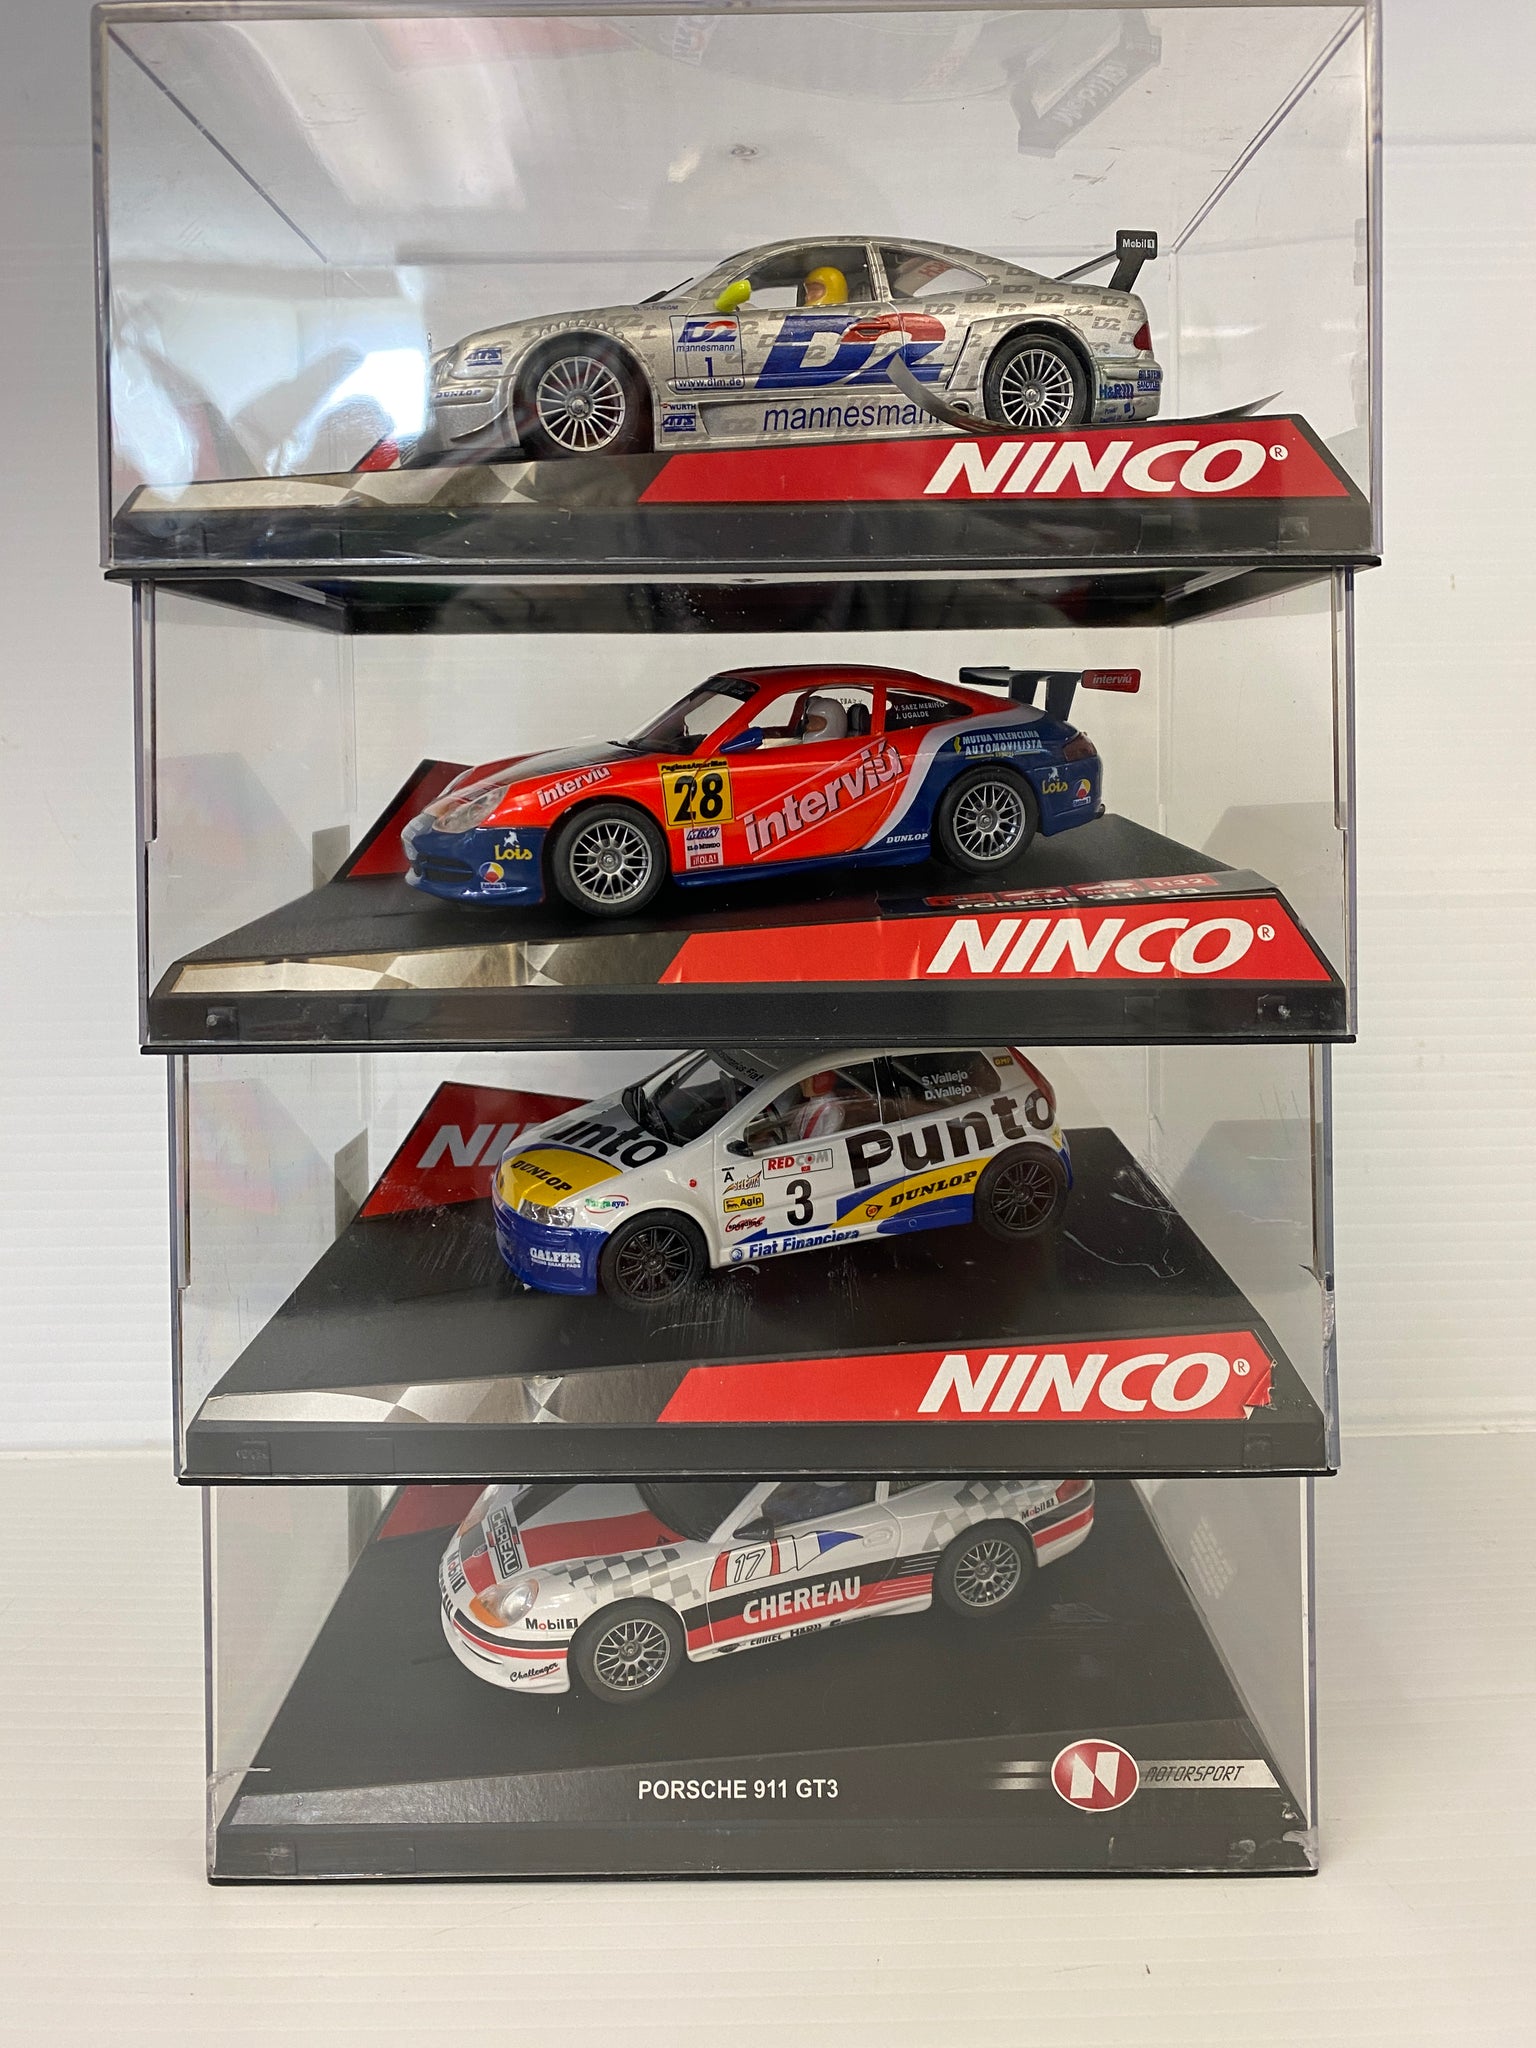 Ninco 4 Pack of Cars 1/32 Slot Cars, 4Pack